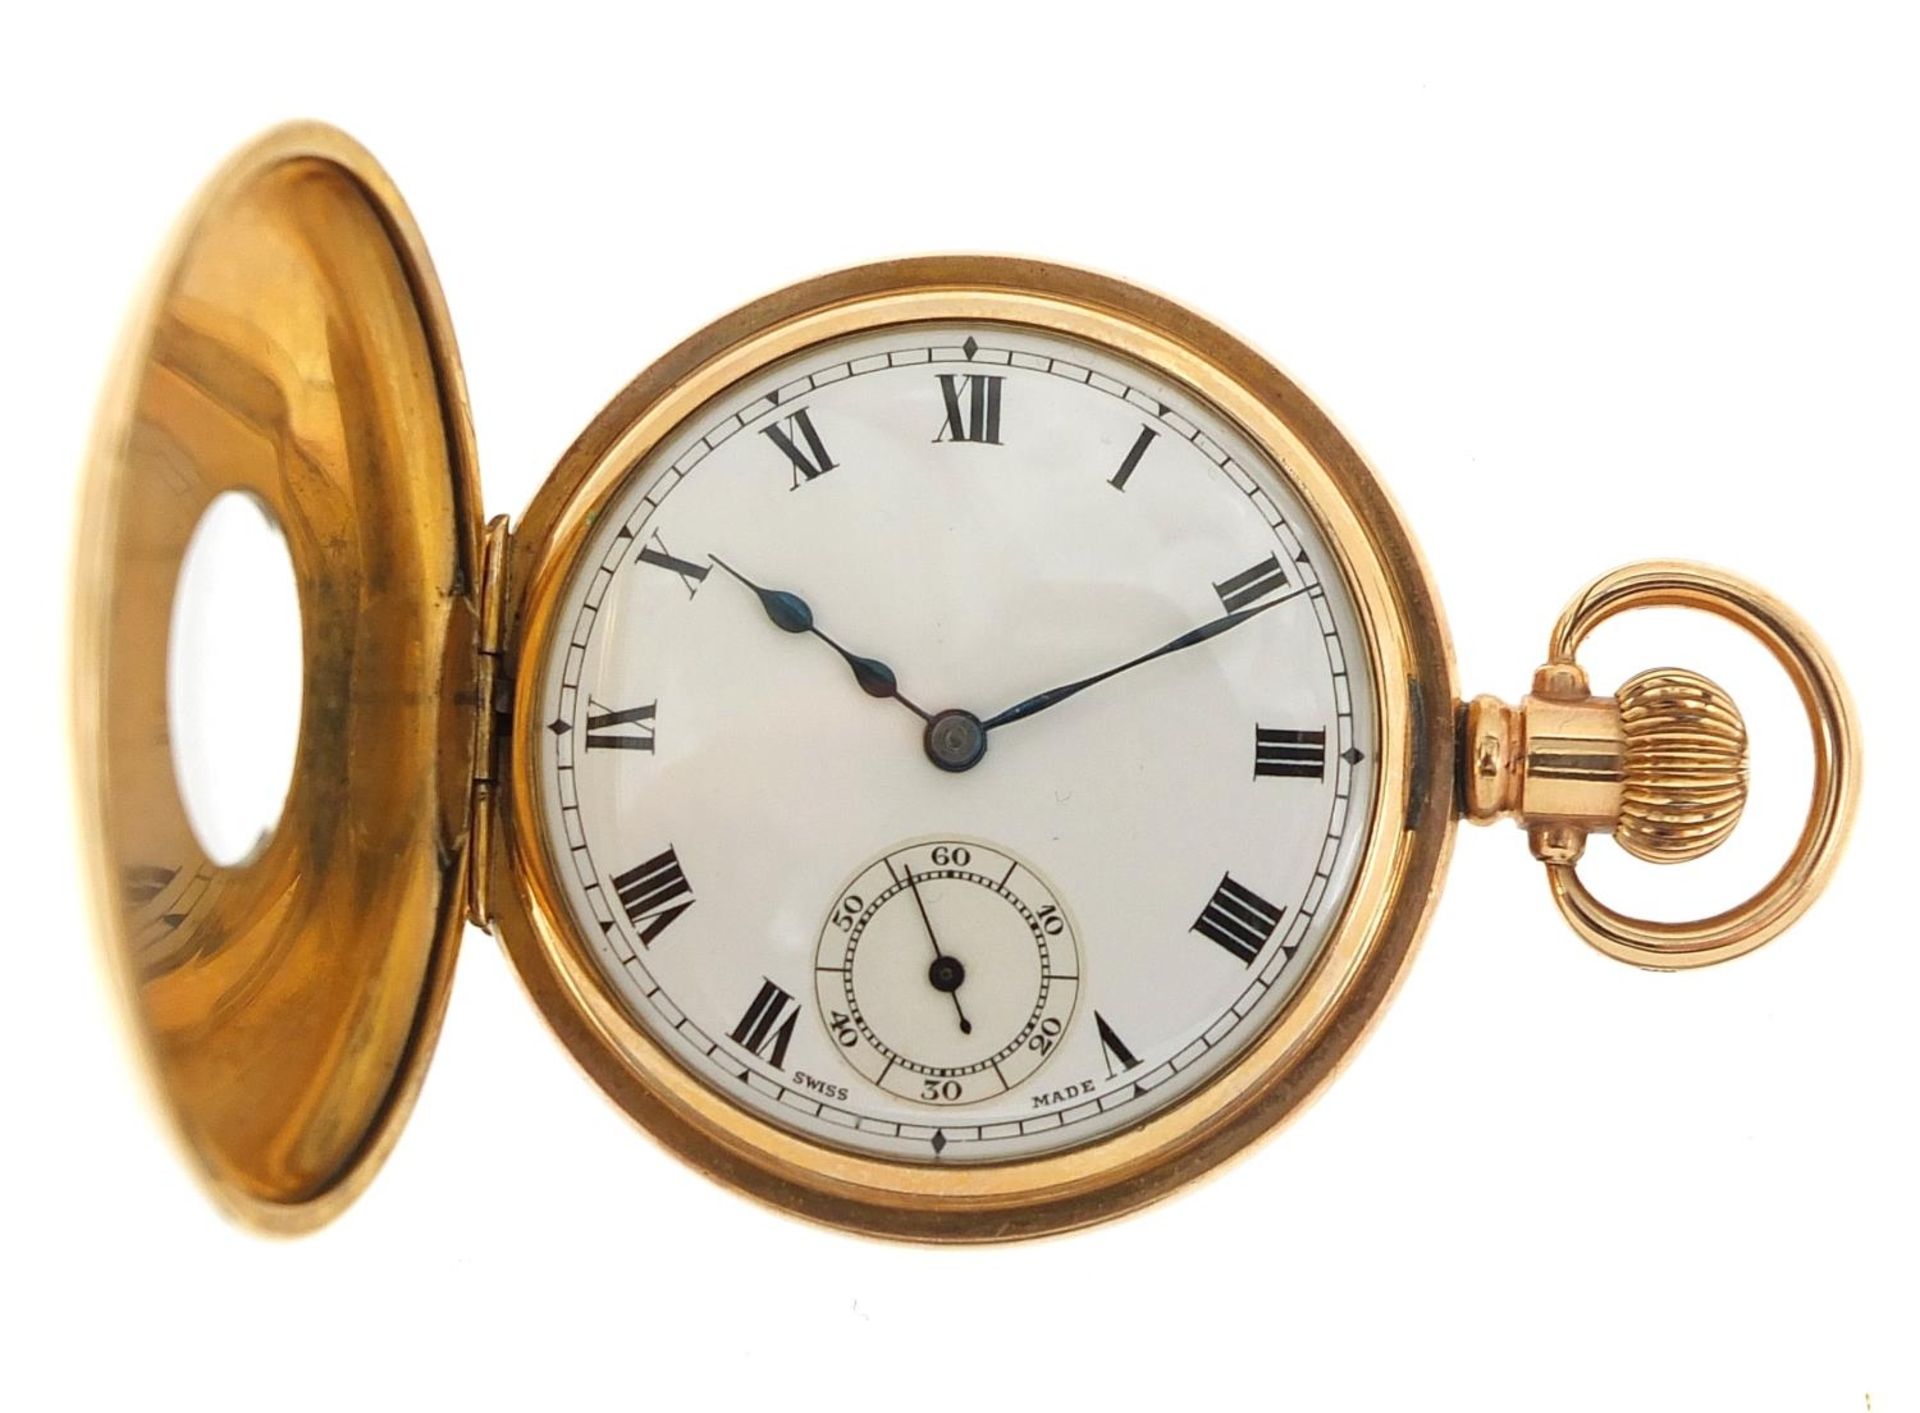 Gentlemen's gold plated half hunter pocket watch with enamelled dial, 50mm in diameter - Image 2 of 6